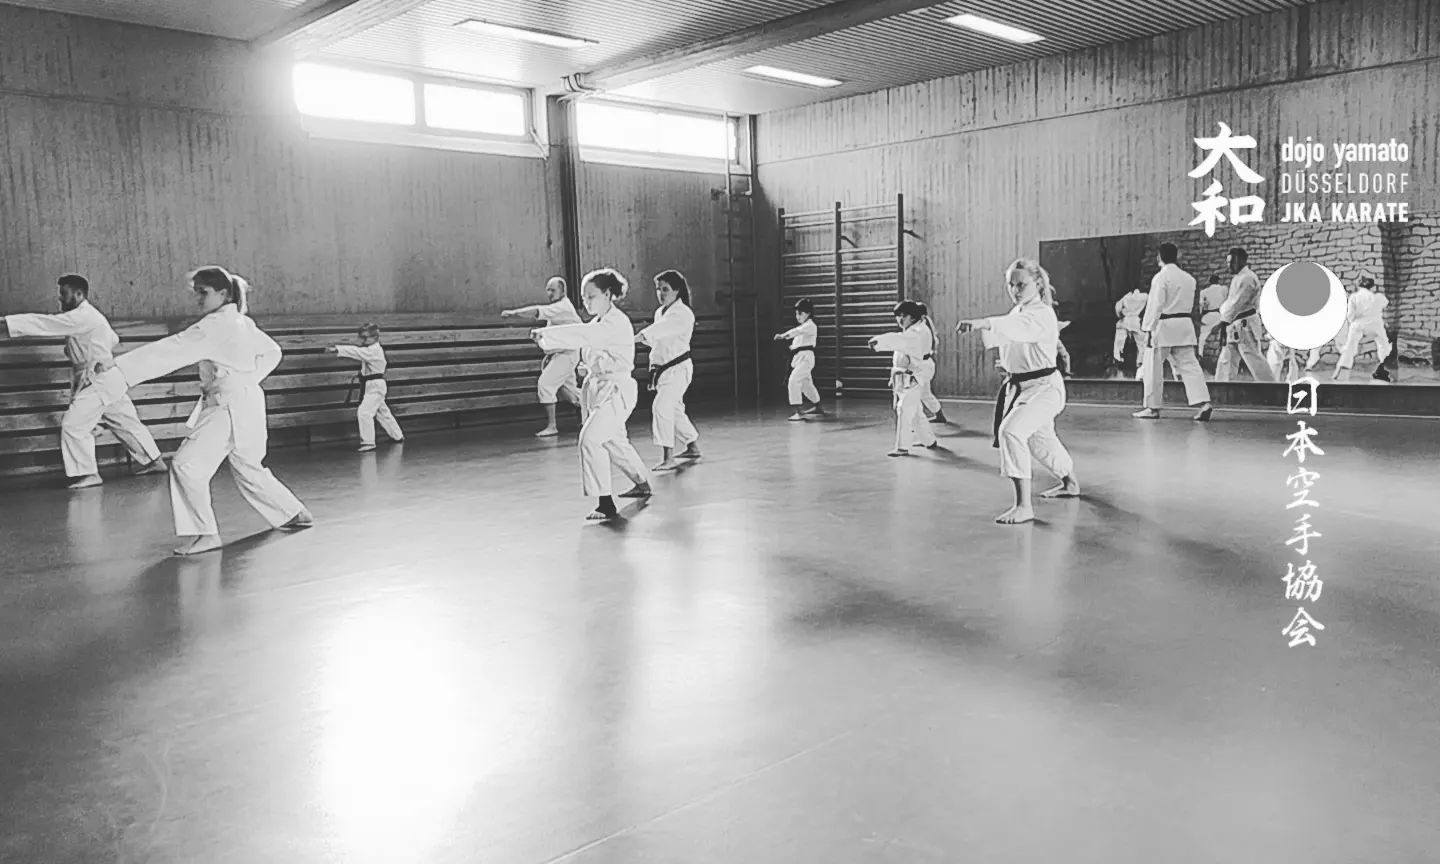 Training im Dojo Yamato Düsseldorf e.V.🥋
Trainer Sebastian Hornfischer
.
.
.
.
.
.
.
.
#karate #training #fun #jka #djkb #kihon #kata #kumite #düsseldorf #duesseldorf #japan #sport #sportmotivation #shotokan #traditional #nrw #yamatoduesseldorf #fitness #fitnessmotivation #jkaKarate #jkakaratedo #neuss #ratingen #hilden #leverkusen #kaarst #selbstbstbewusstsein #selbstvertrauen